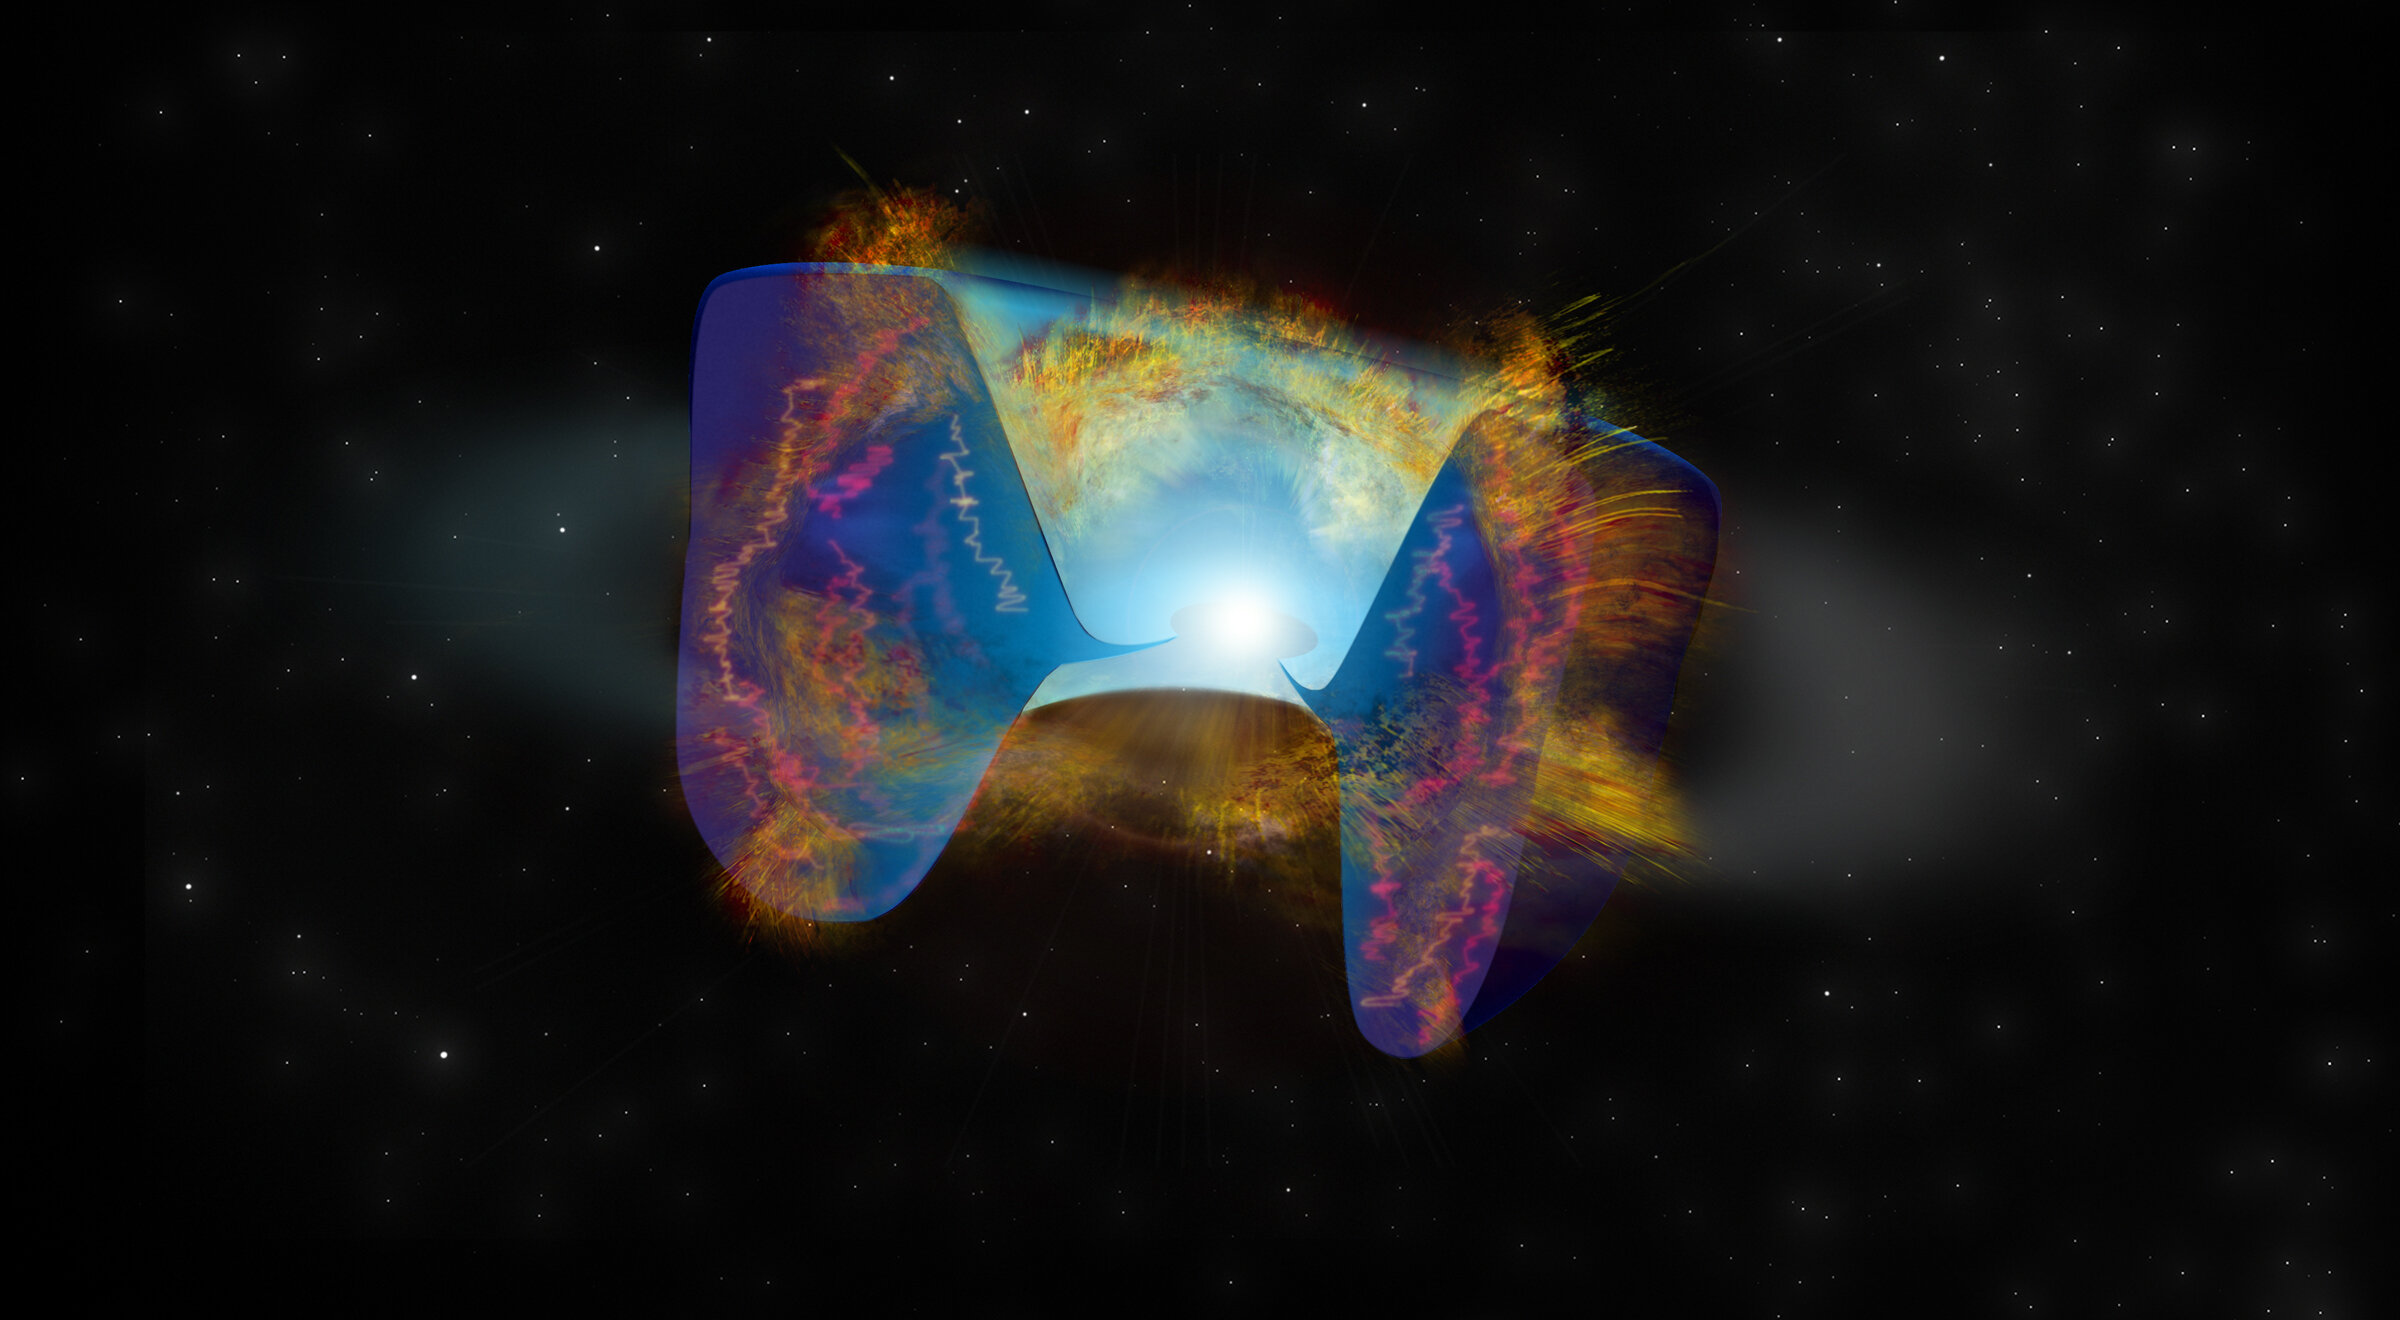 Stellar collision triggers supernova explosion